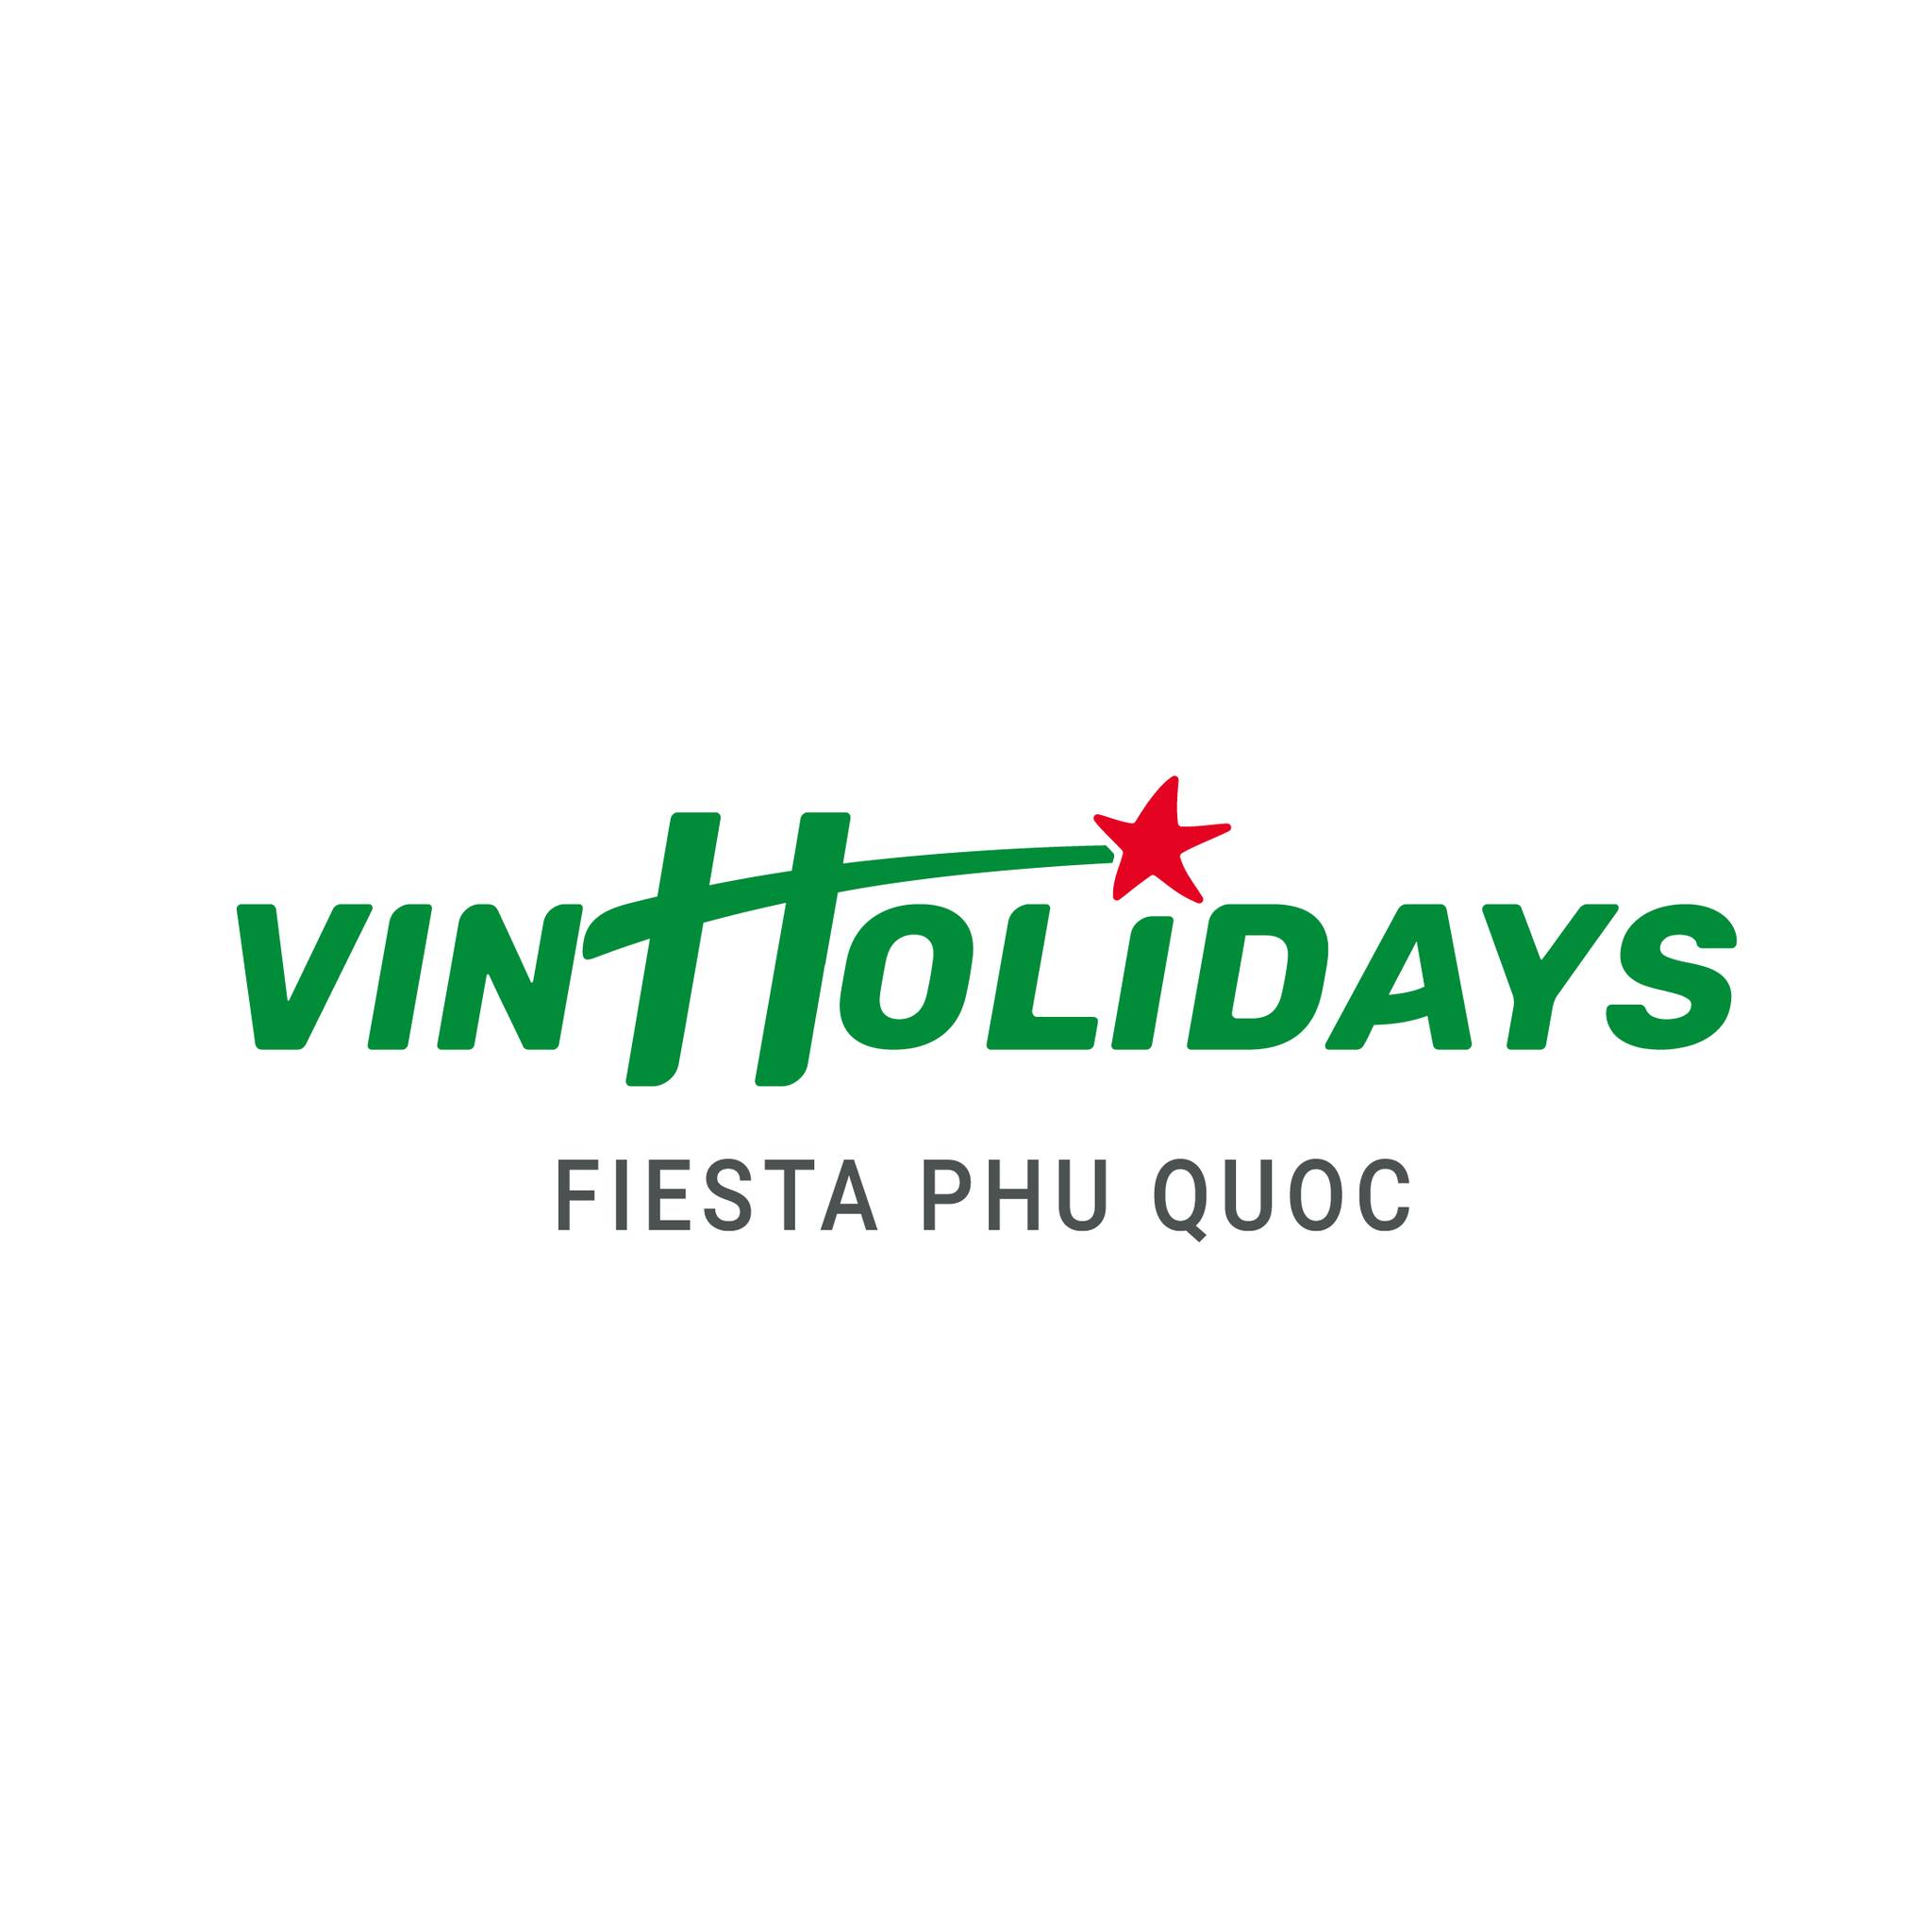 Image result for VinHolidays Fiesta Phu Quoc